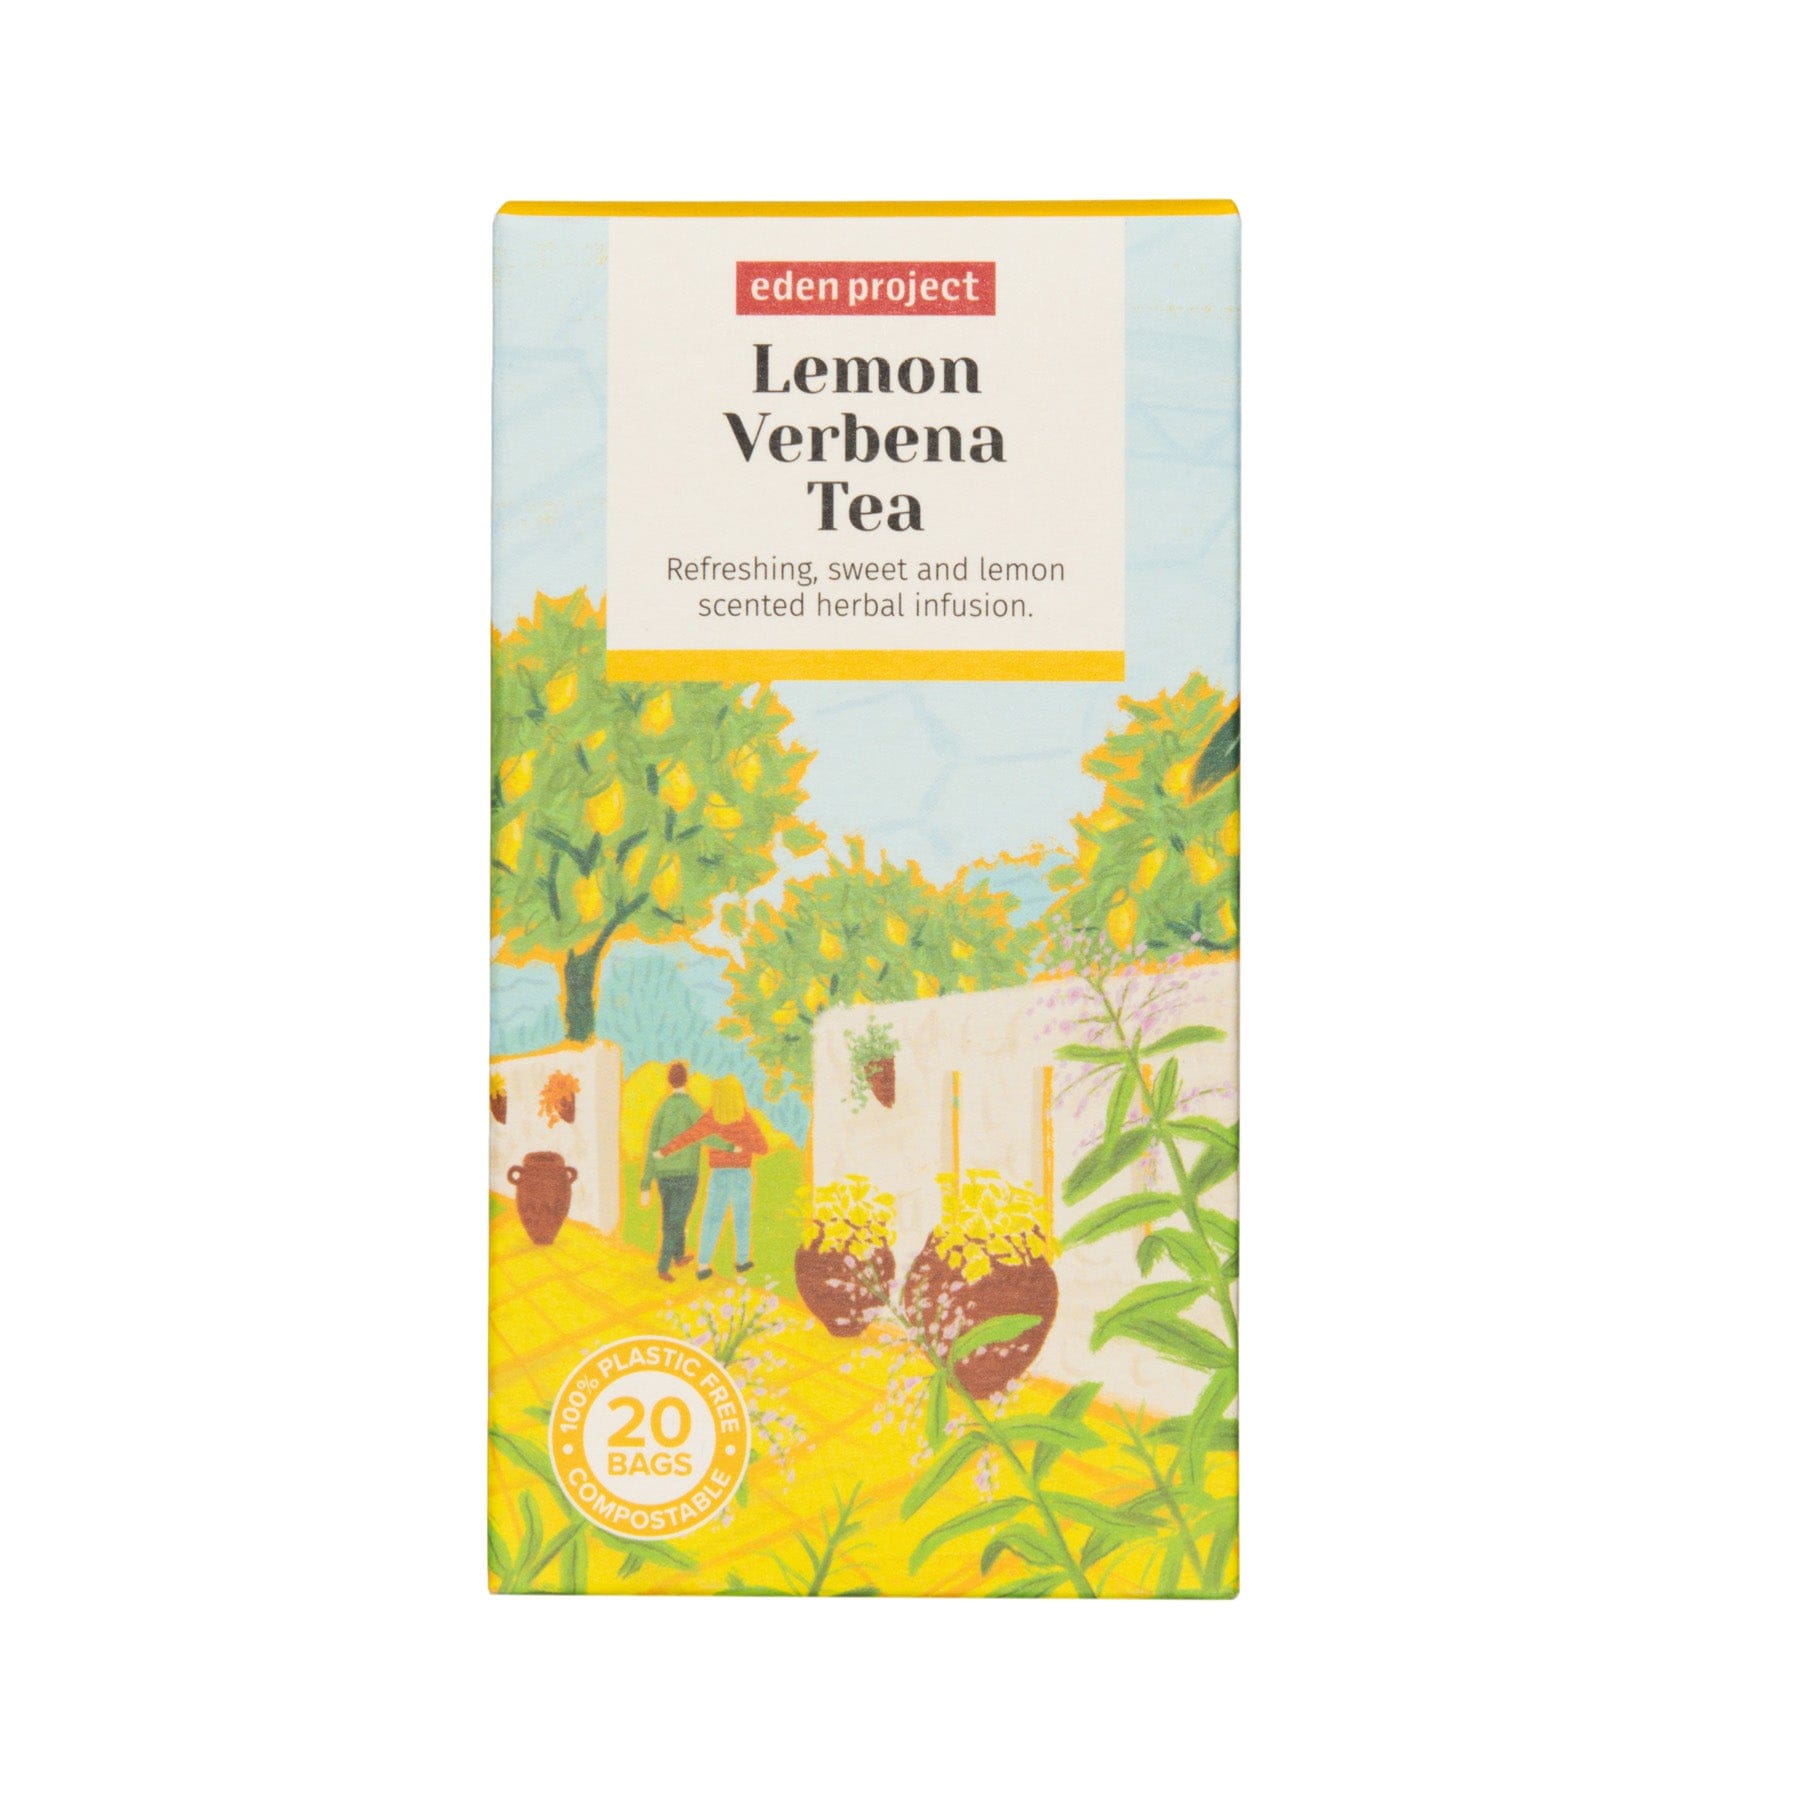 Lemon verbena tea 20g